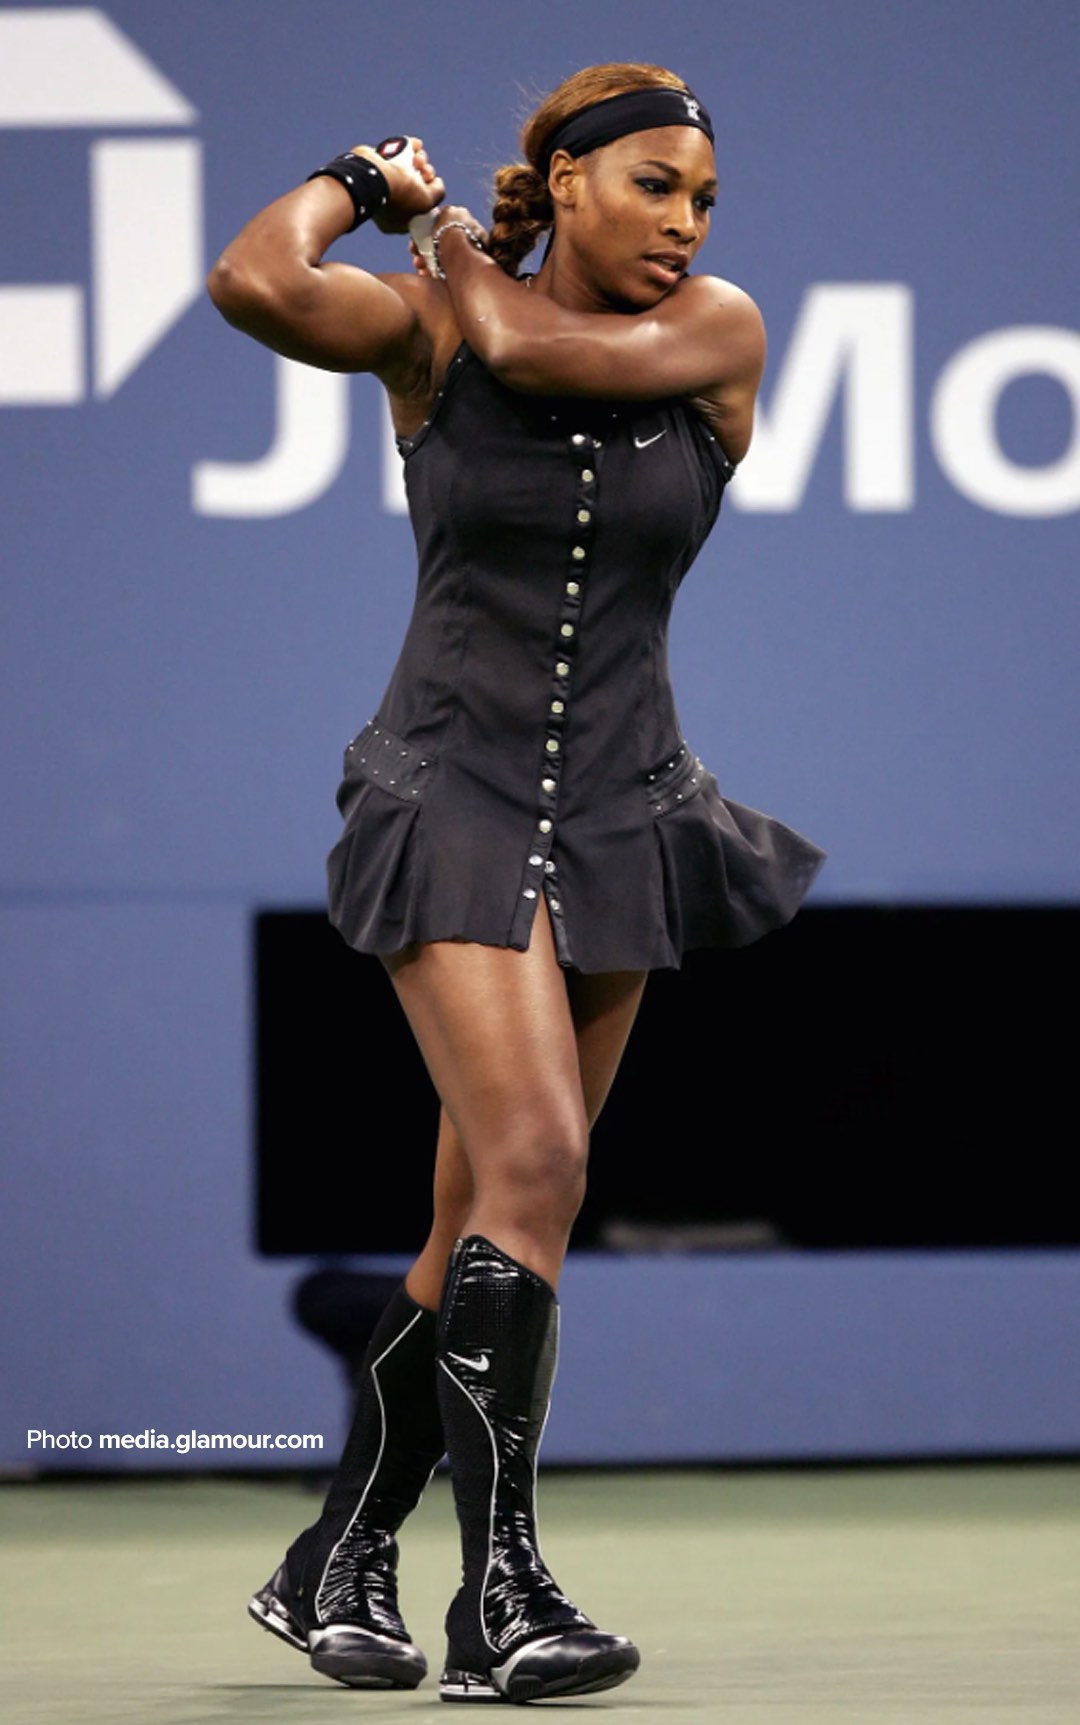 Serena Williams in the 2004 US Open